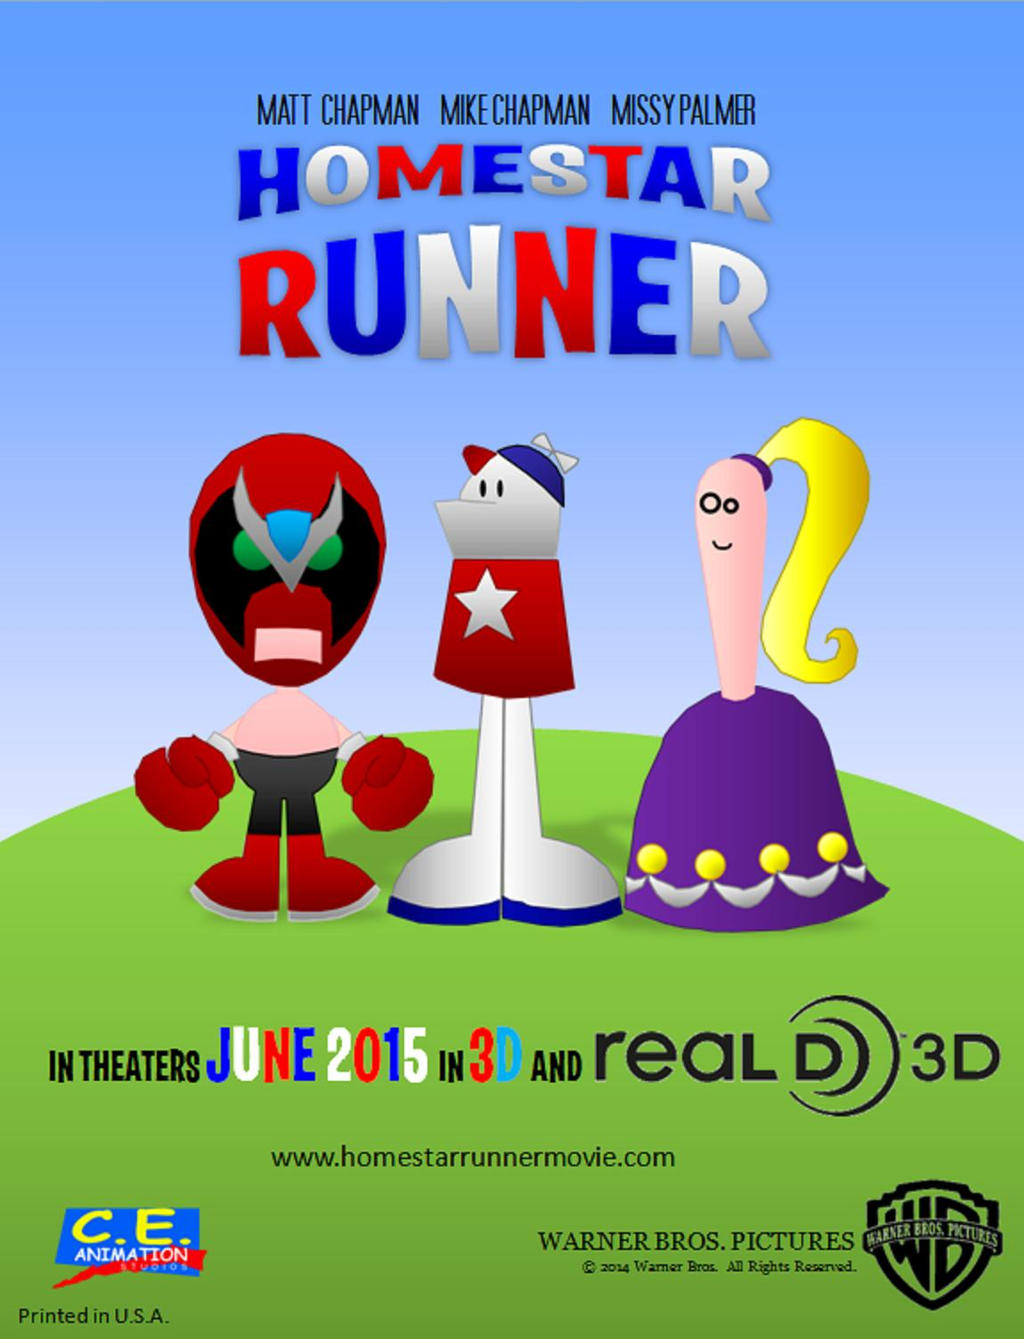 Homestar Runner (2015) Movie Teaser Poster by RobbbieFactor on DeviantArt